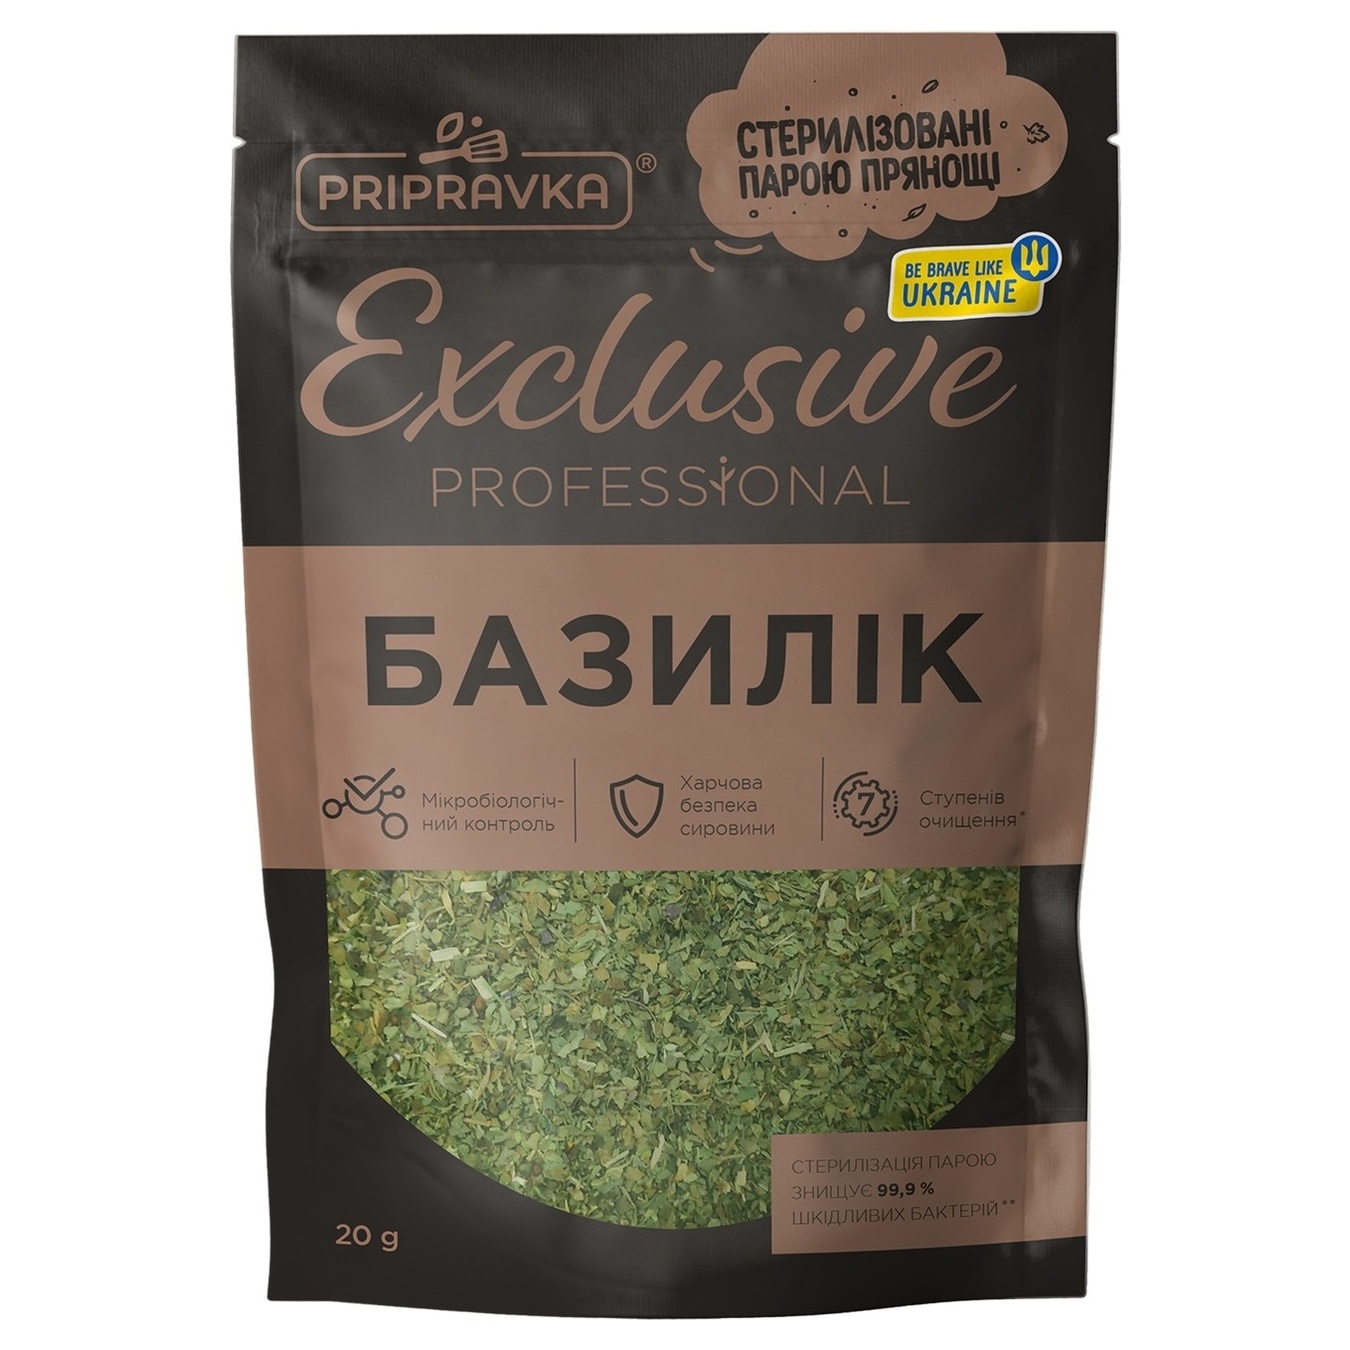 Pripravka Exclusive Professional basil spices 20g